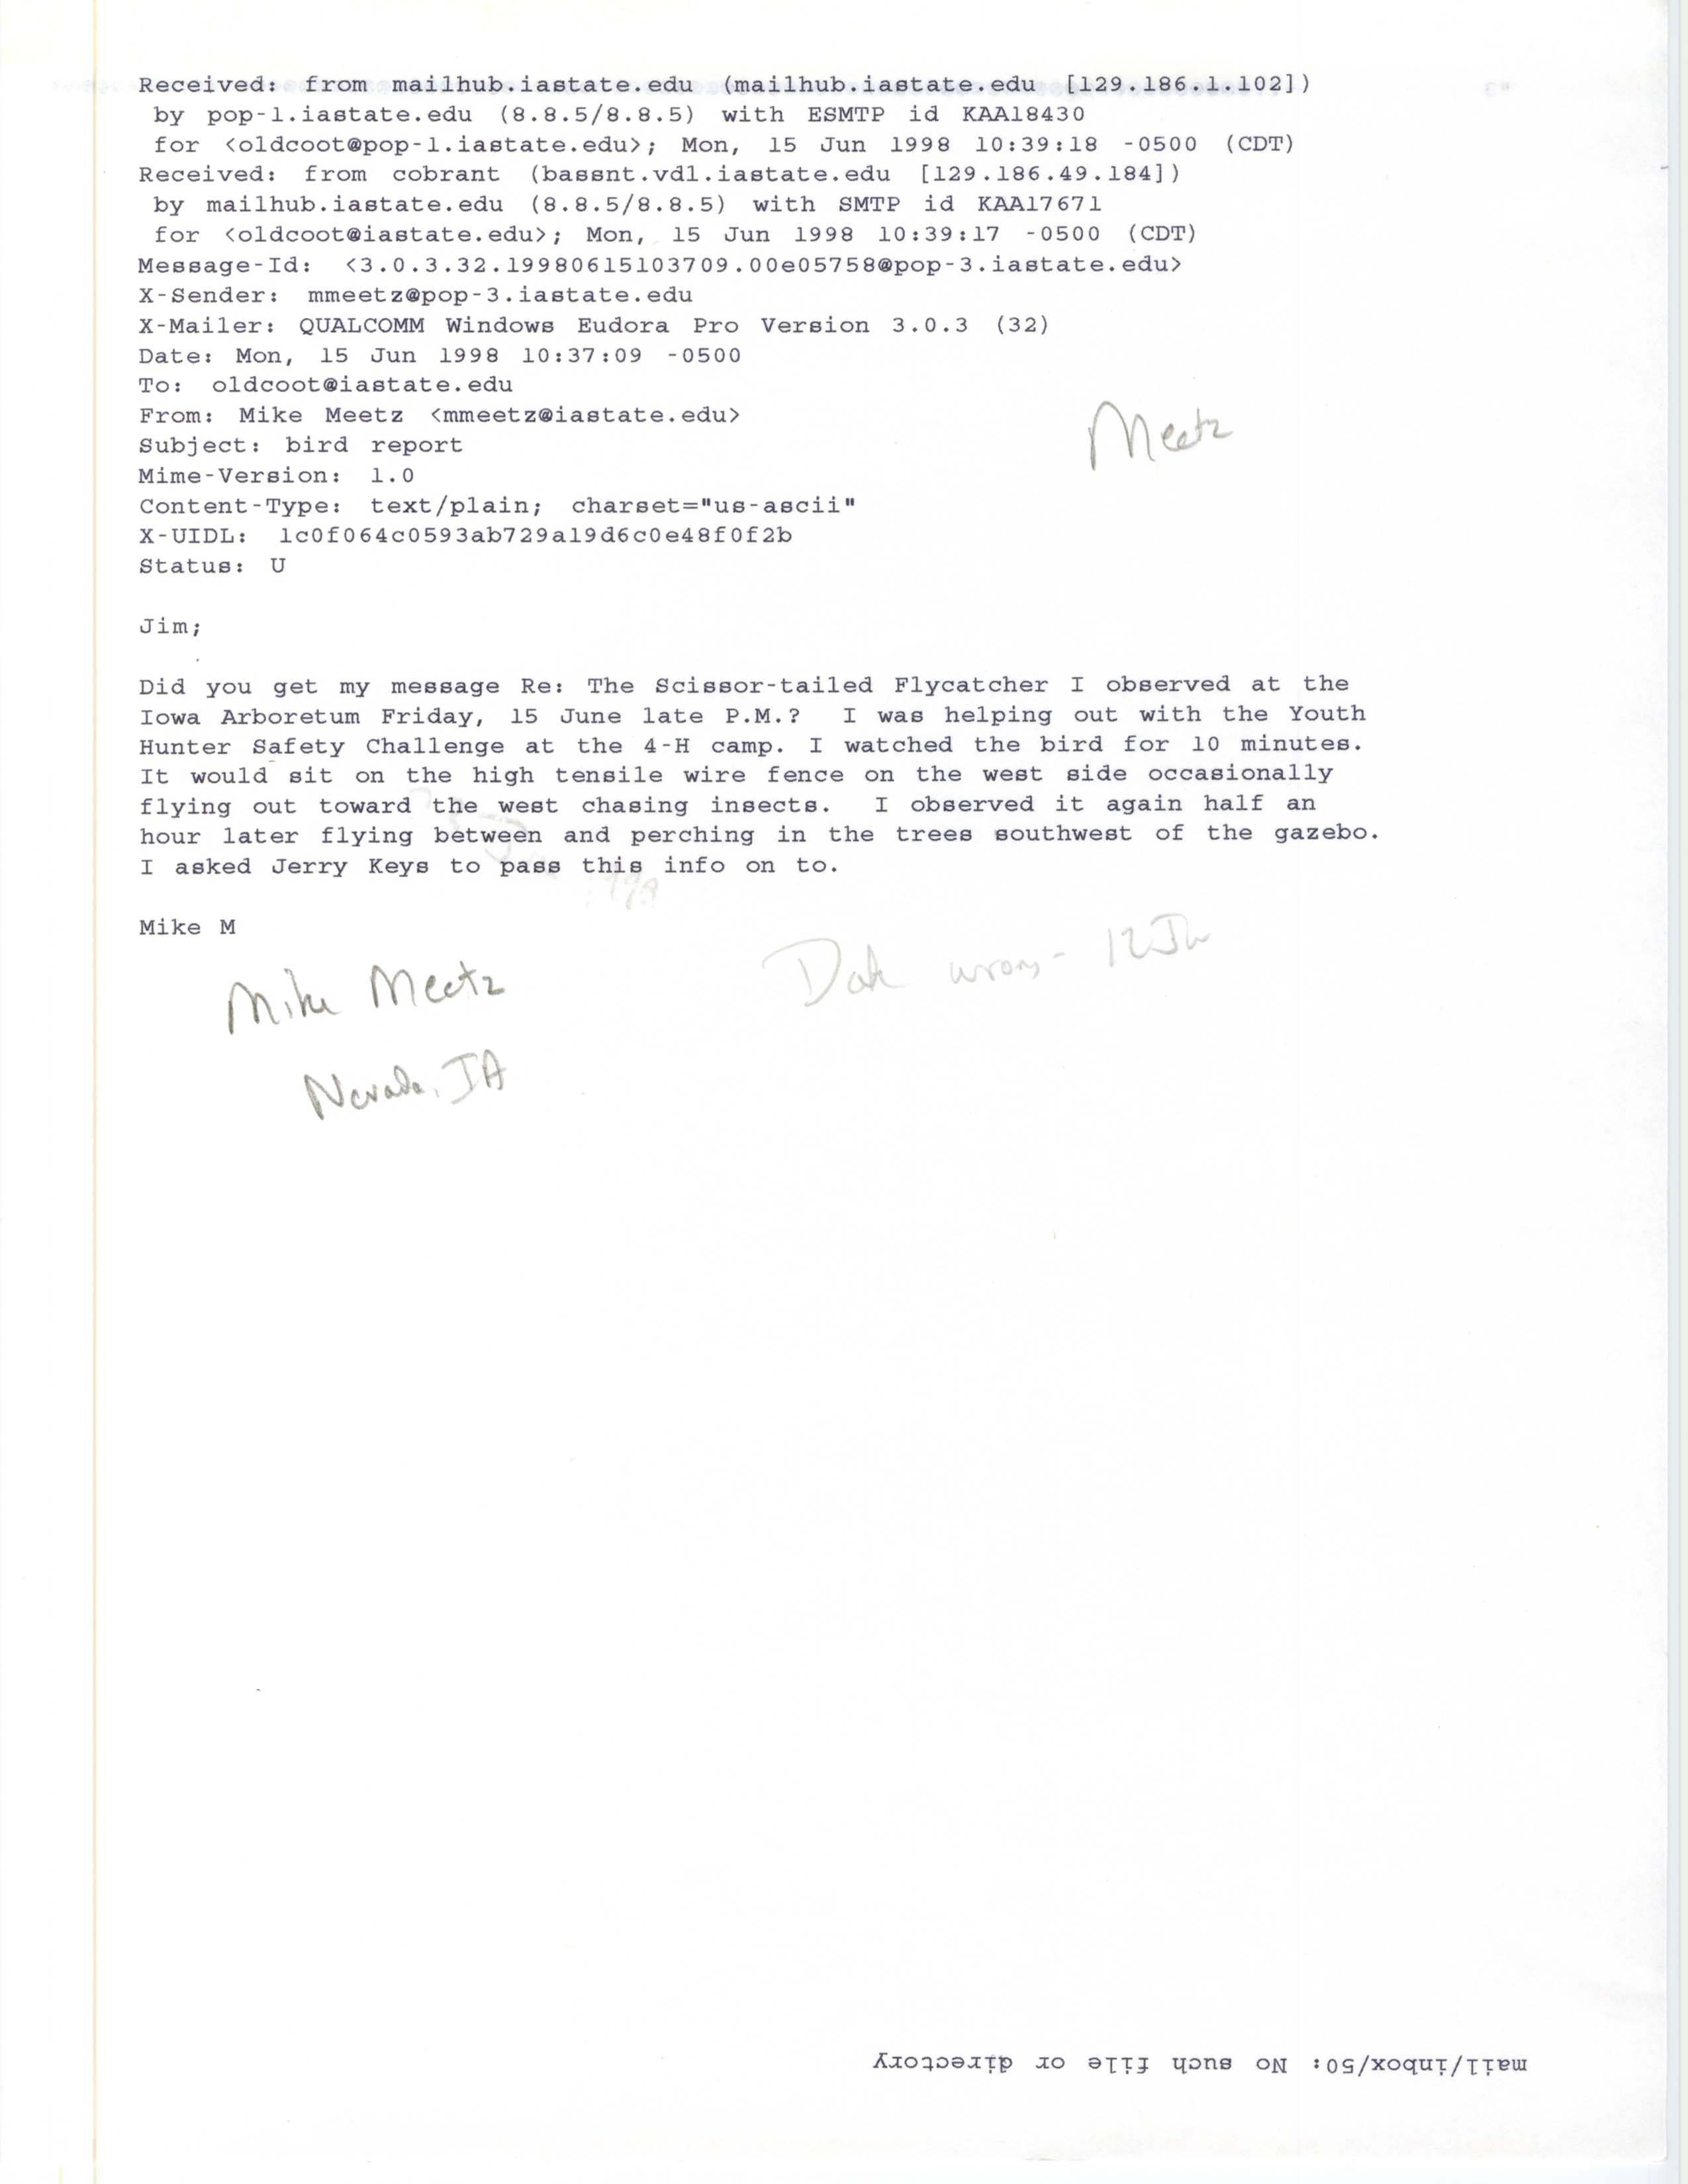 Mike Meetz email to Jim Dinsmore regarding Scissor-tailed Flycatcher sighting, June 15, 1998